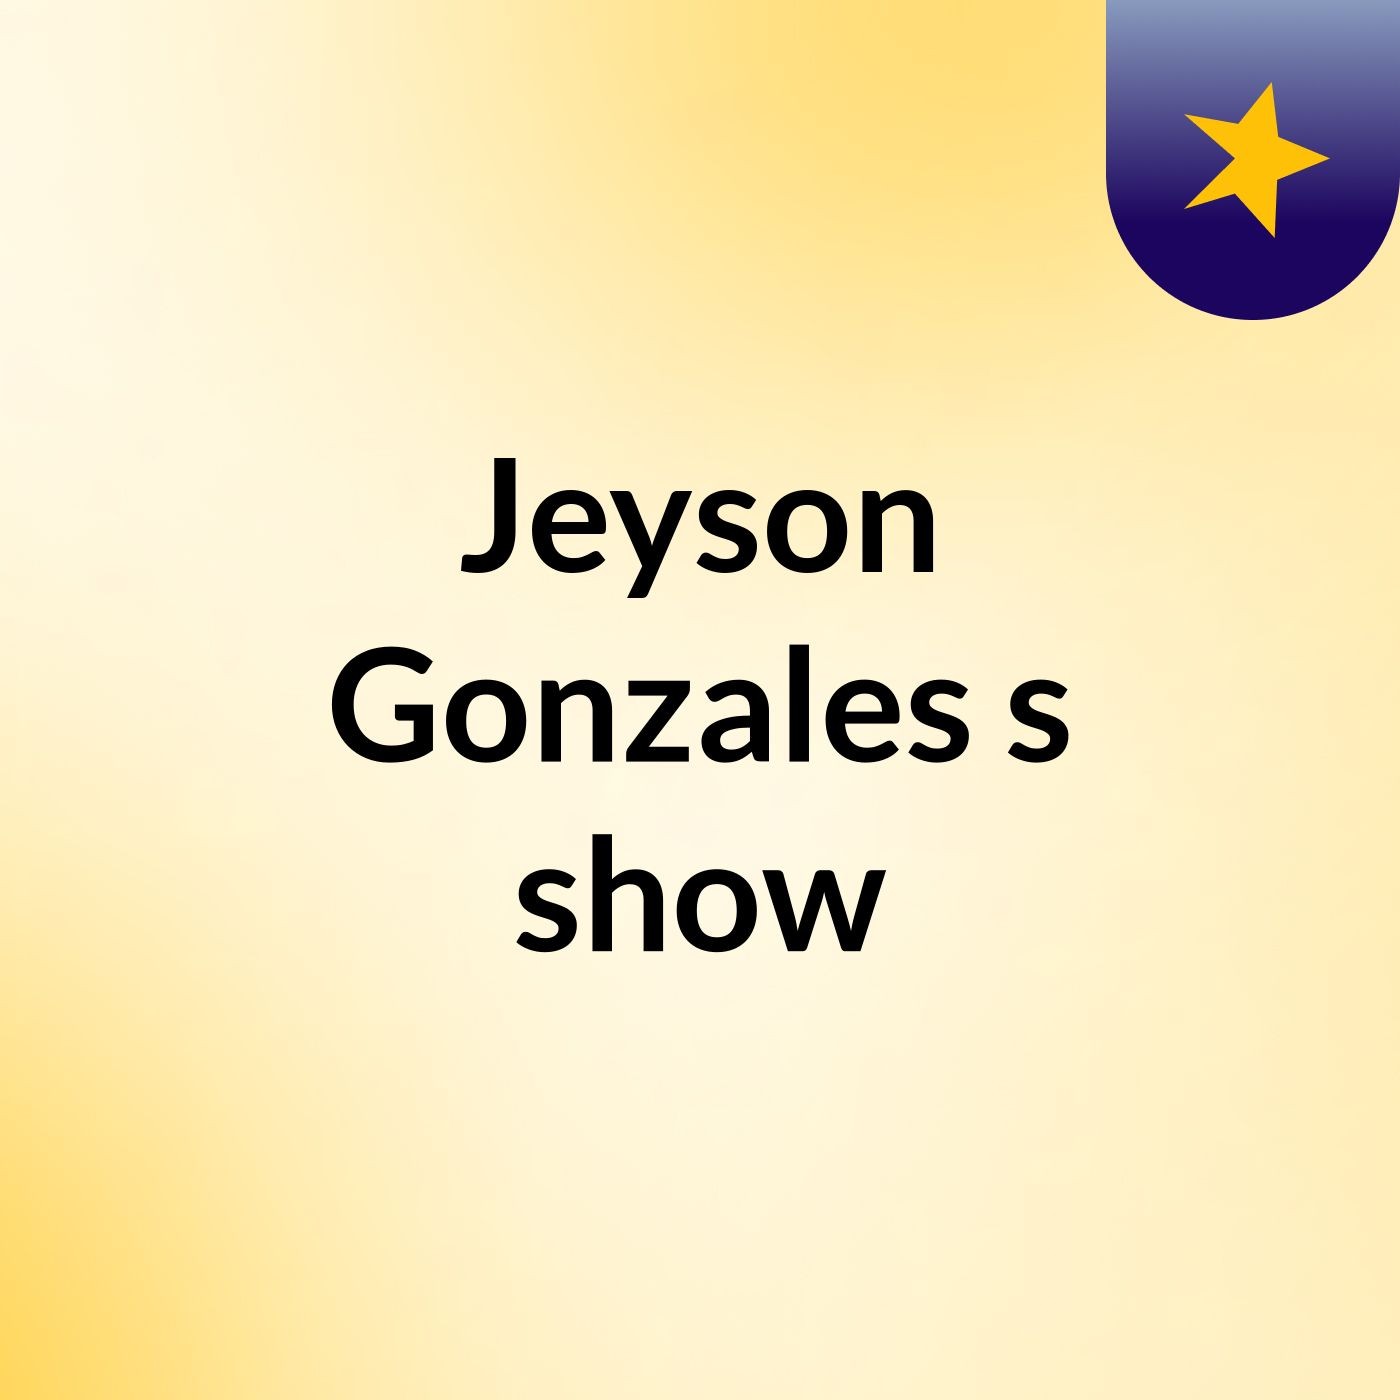 Jeyson Gonzales's show